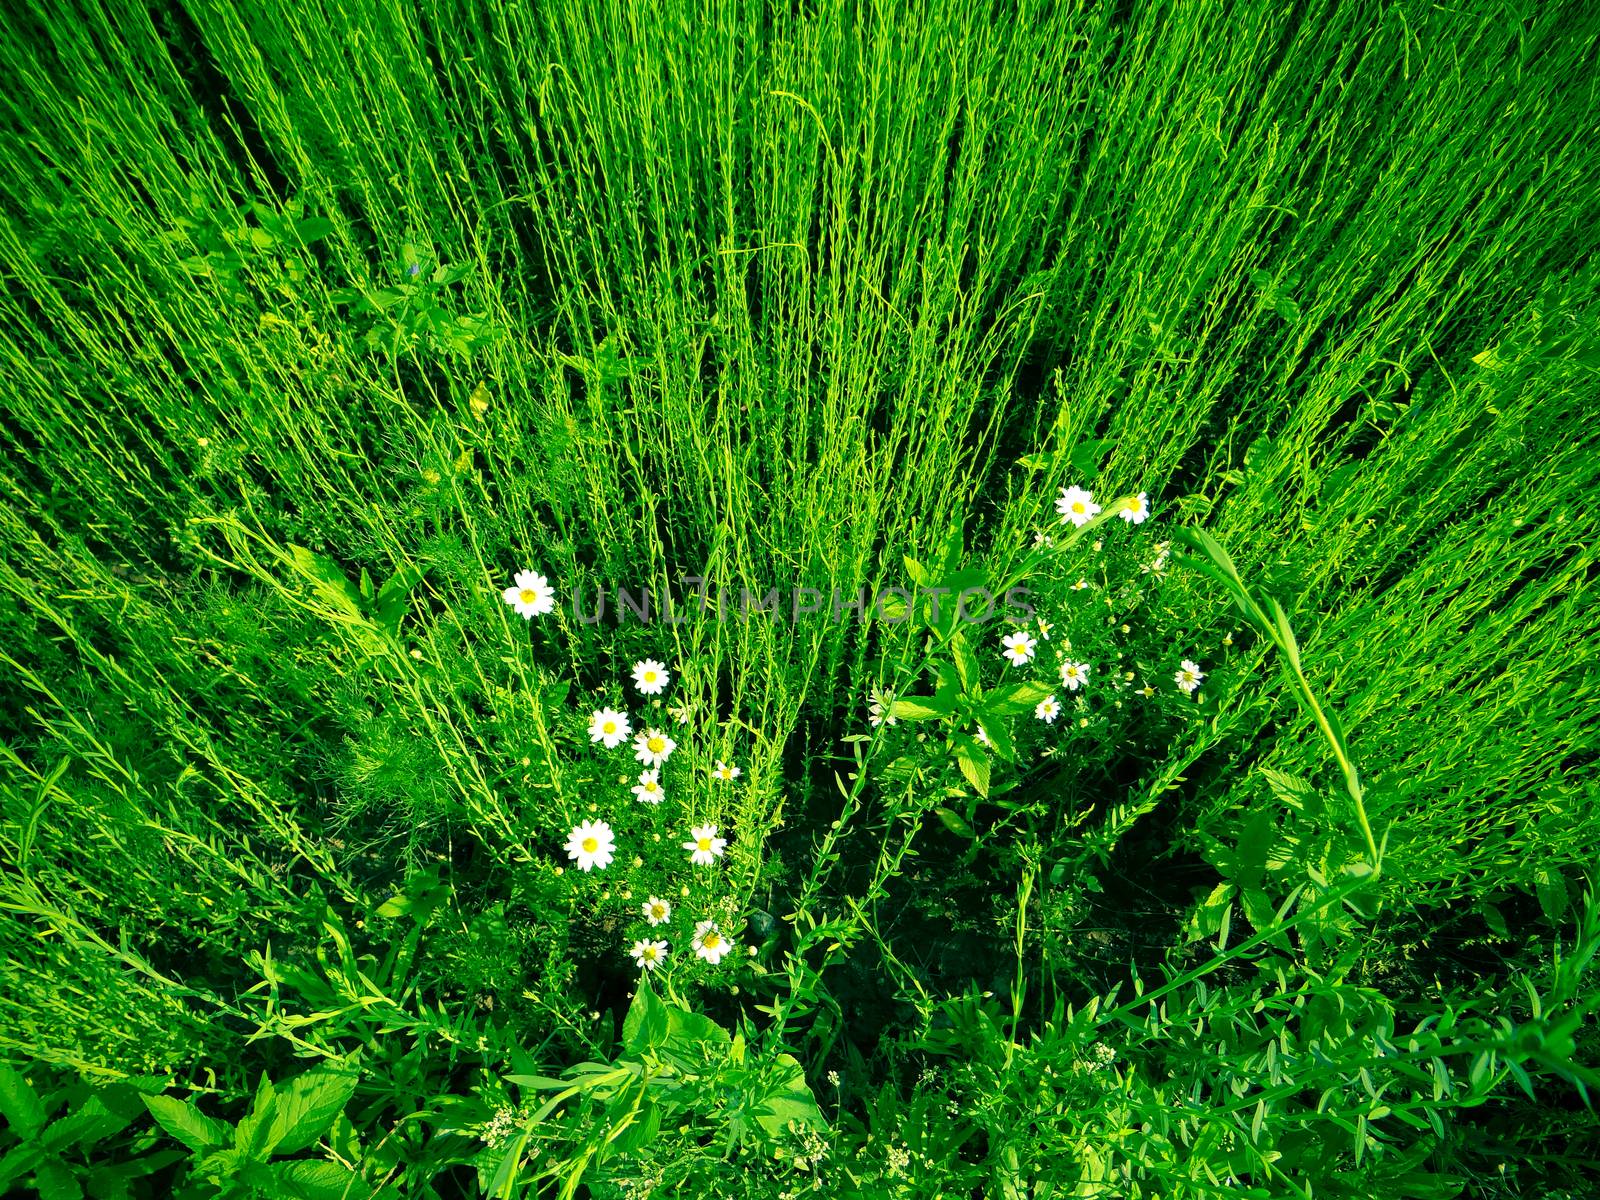 Green wall of grass and daisies by natali_brill